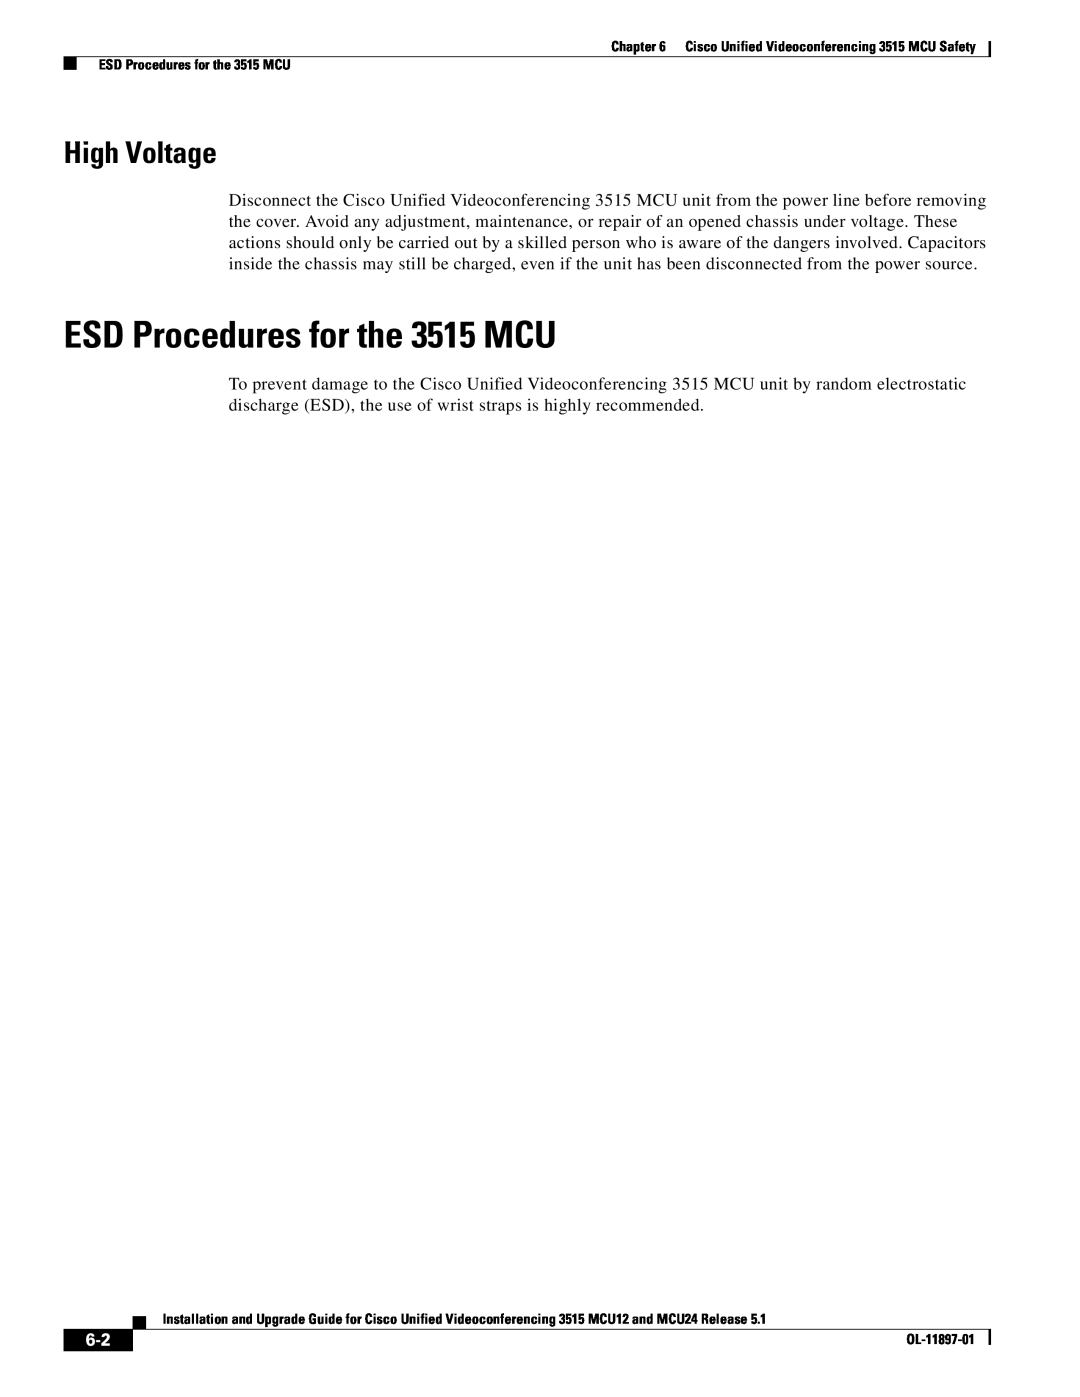 Cisco Systems MCU24 manual ESD Procedures for the 3515 MCU, High Voltage 